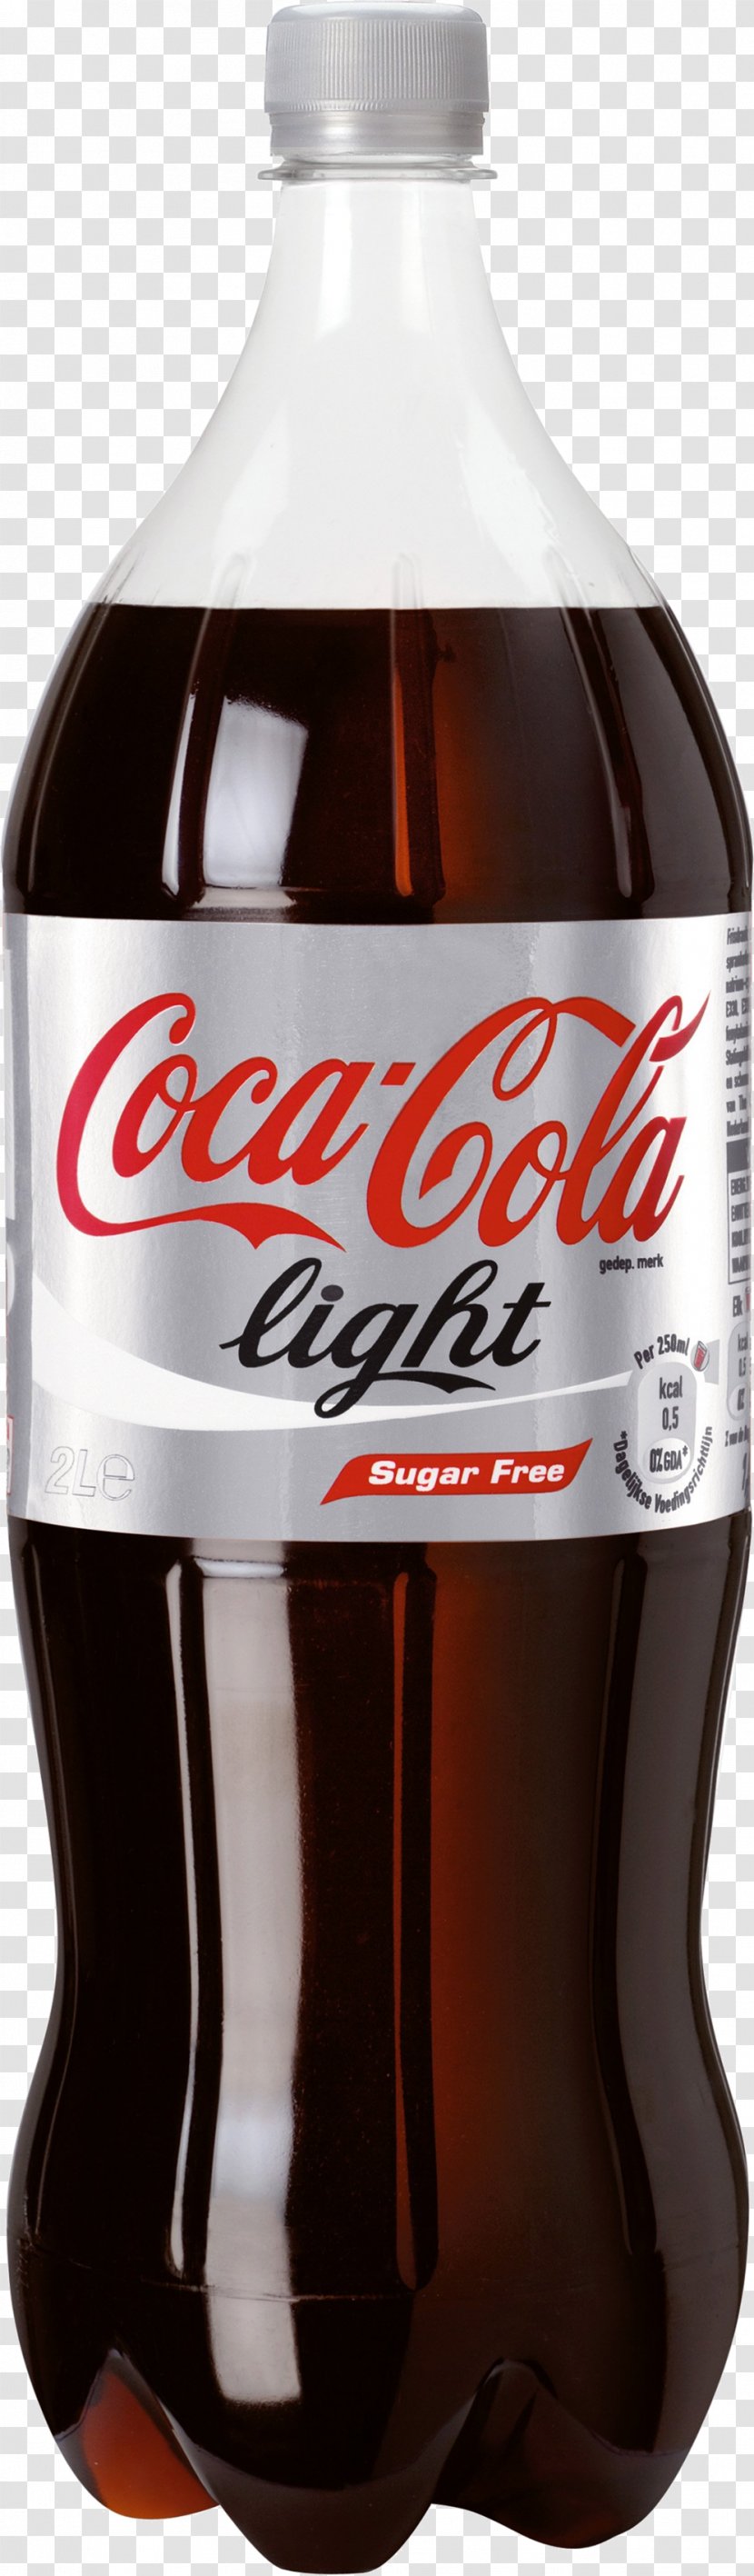 Coca-Cola Soft Drink Sprite Zero Diet Coke - Coca Cola Bottle Image Transparent PNG